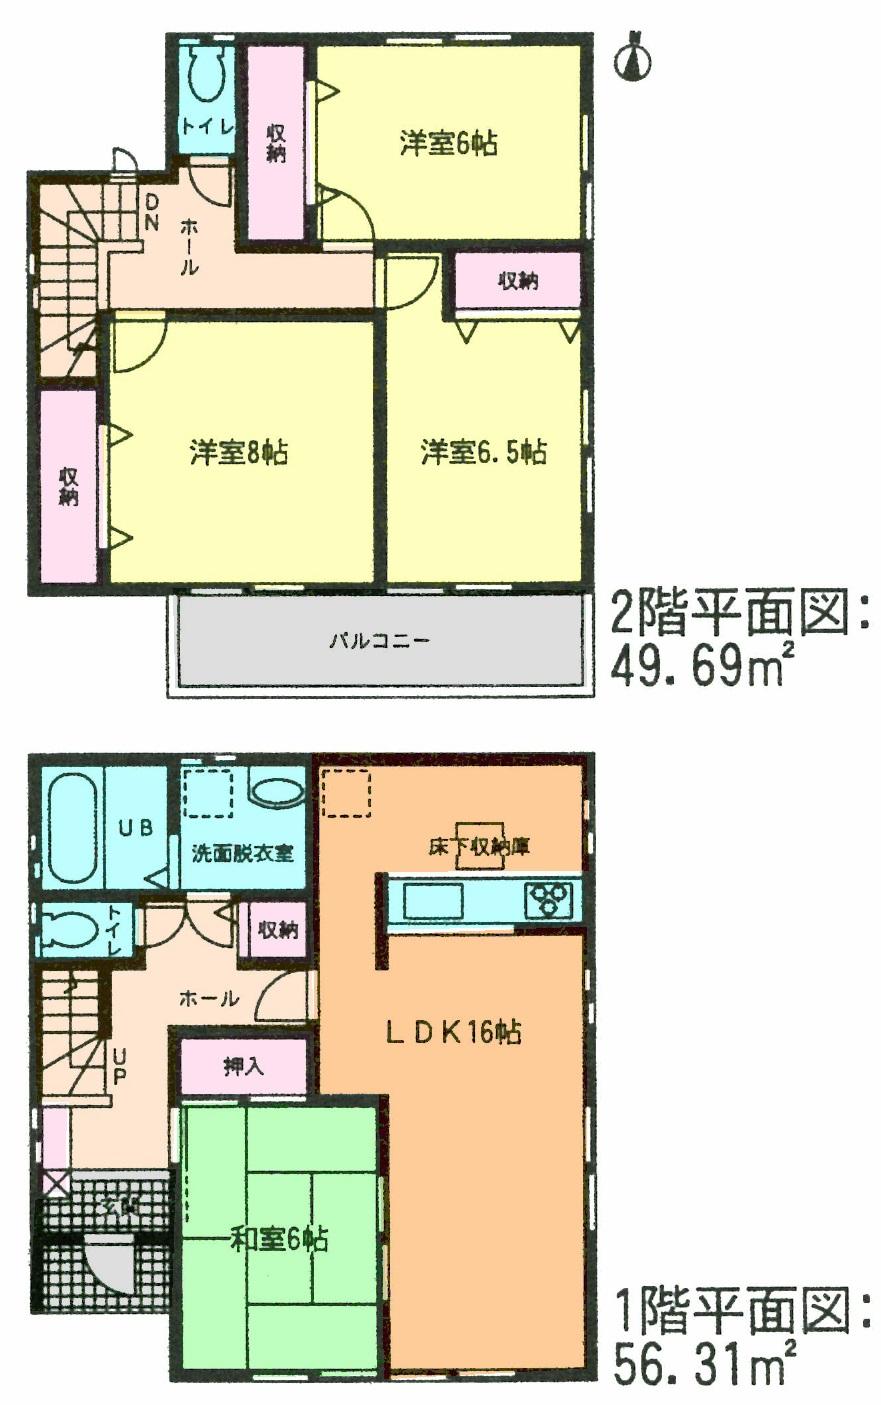 Floor plan. (1 Building), Price 22,800,000 yen, 4LDK, Land area 120.12 sq m , Building area 106 sq m